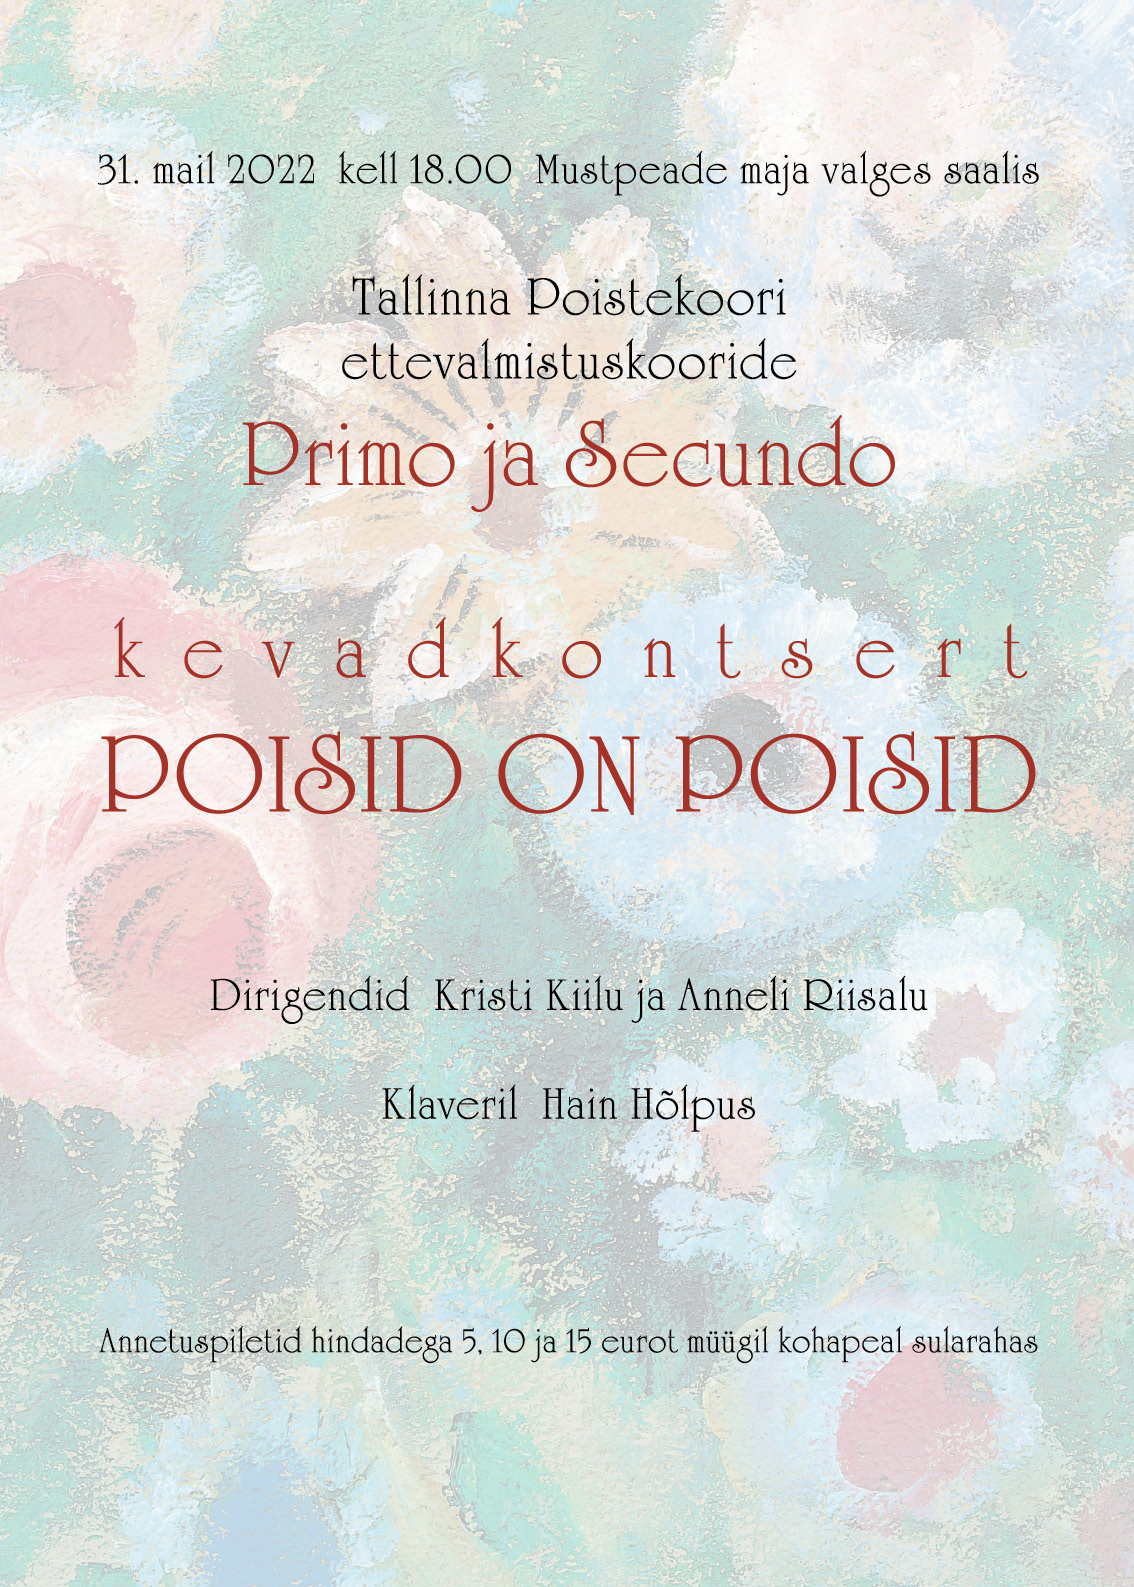 Tallinna Poistekoori ettevalmistuskooride Primo ja Secundo kevadkontsert 